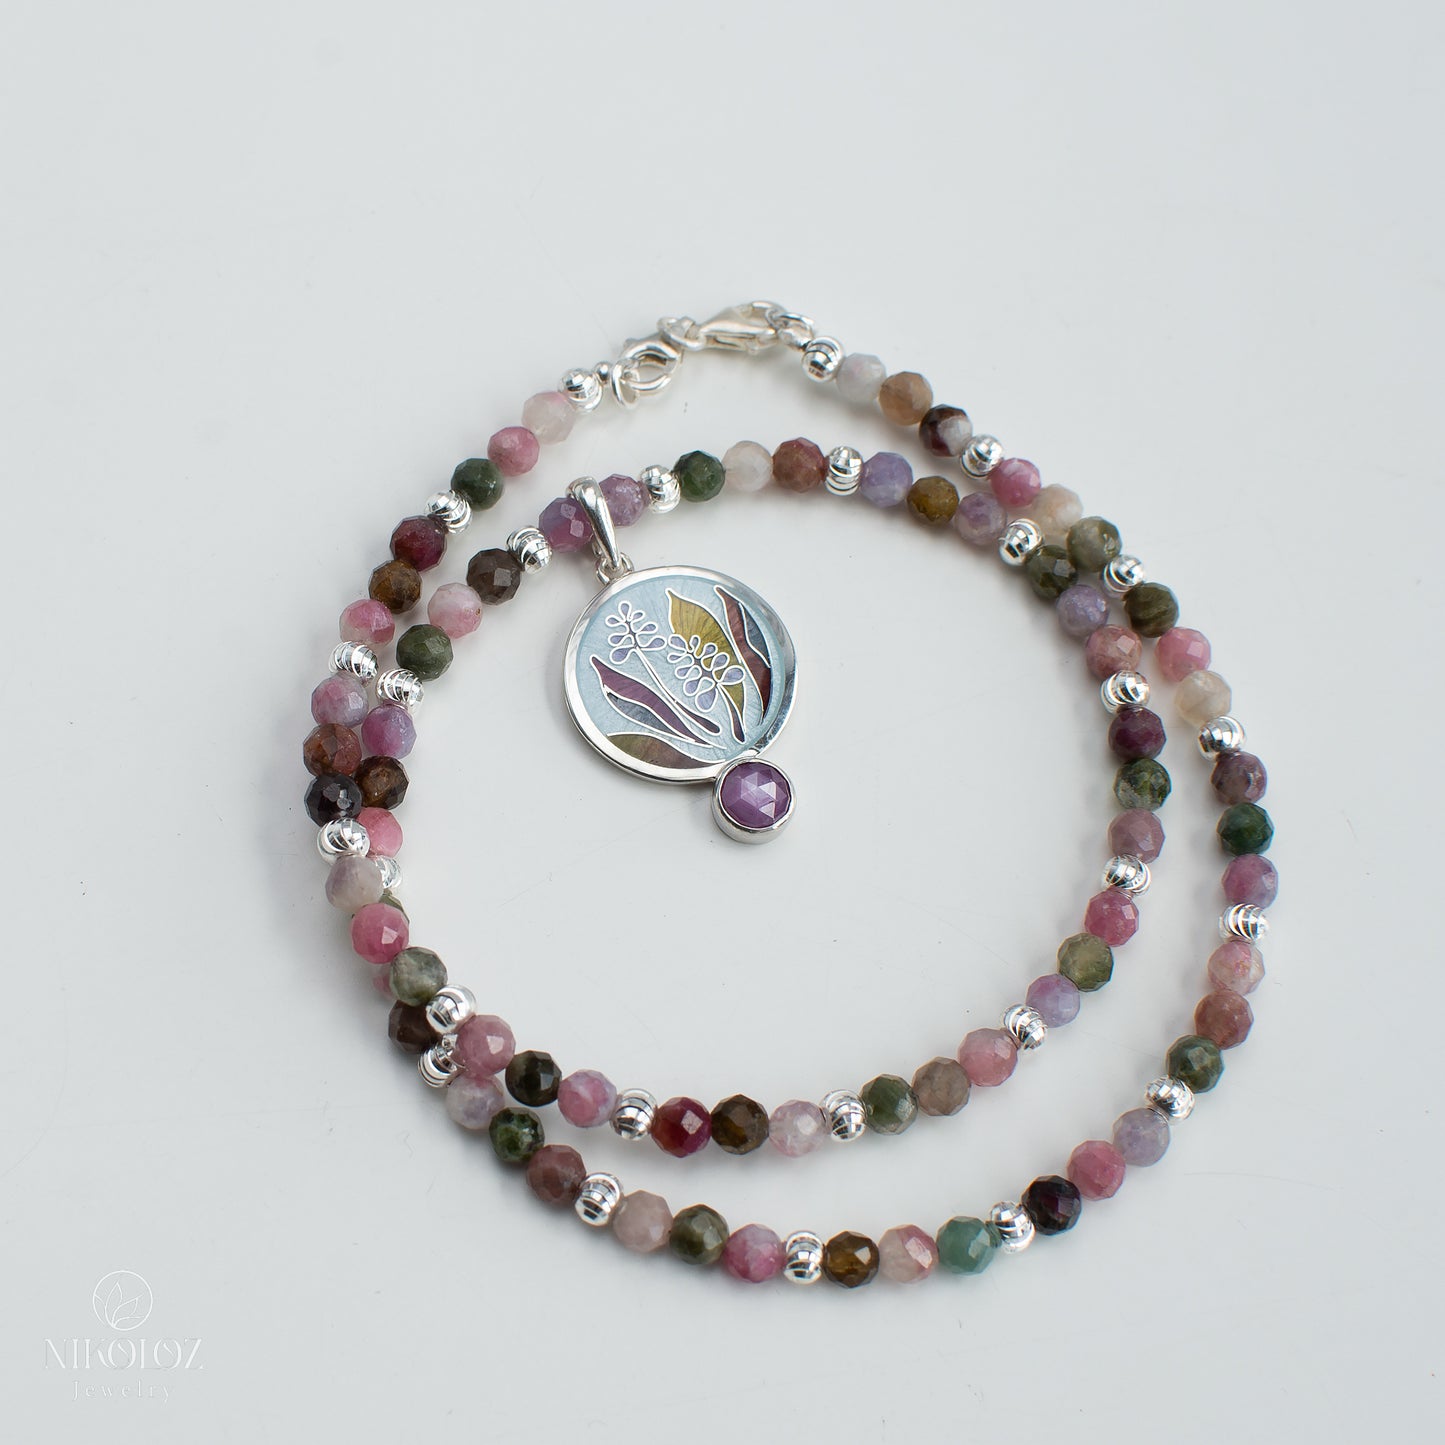 Ruby Star Sapphire Pendant With Tourmaline Necklace "Cordyline fruticosa"